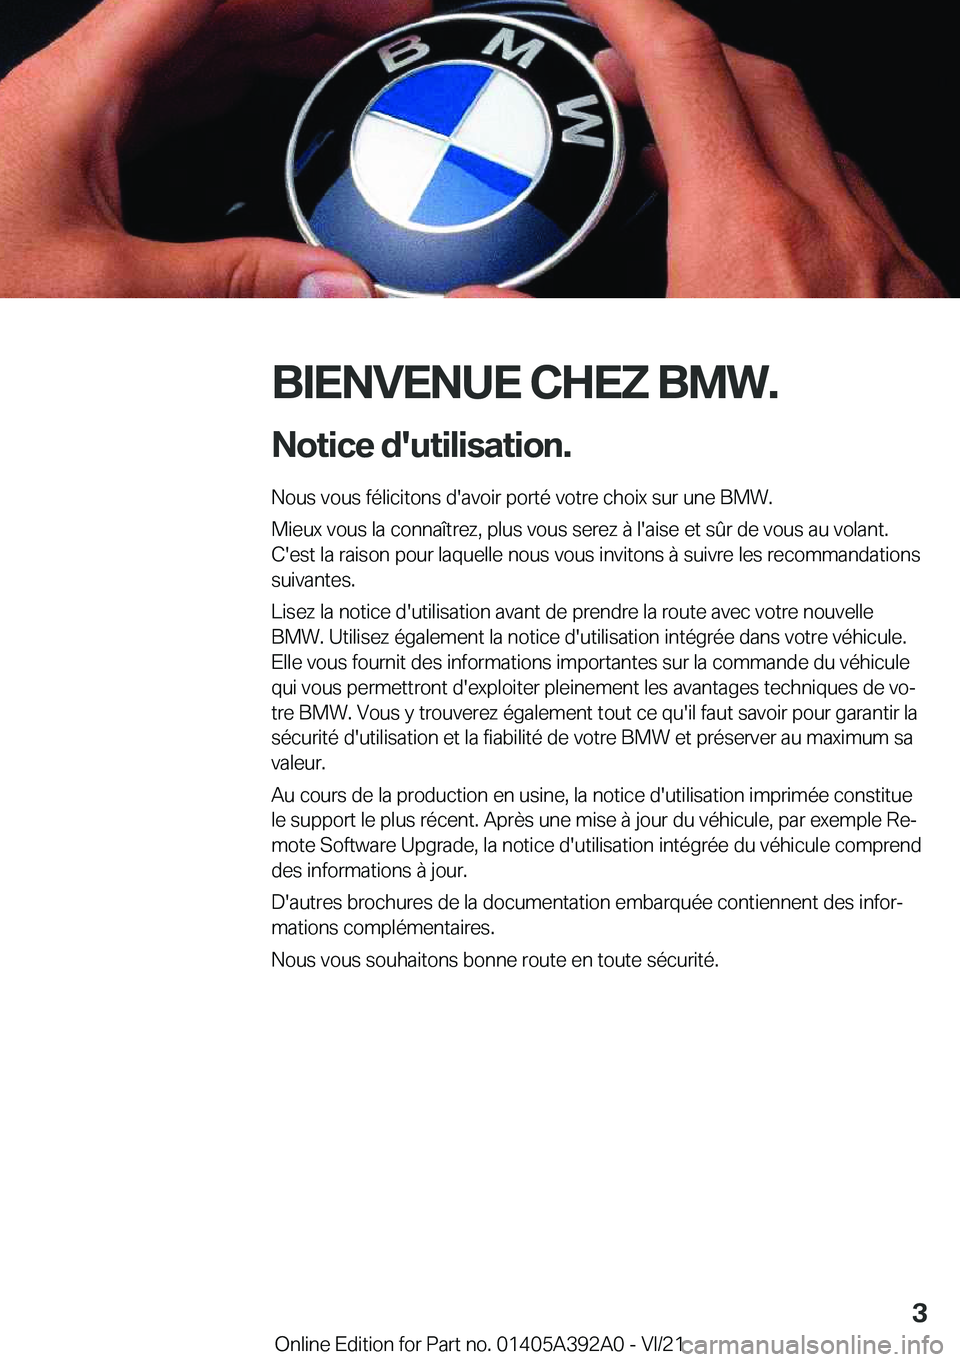 BMW 4 SERIES 2022  Notices Demploi (in French) �B�I�E�N�V�E�N�U�E��C�H�E�Z��B�M�W�.�N�o�t�i�c�e��d�'�u�t�i�l�i�s�a�t�i�o�n�.
�N�o�u�s��v�o�u�s��f�é�l�i�c�i�t�o�n�s��d�'�a�v�o�i�r��p�o�r�t�é��v�o�t�r�e��c�h�o�i�x��s�u�r��u�n�e�